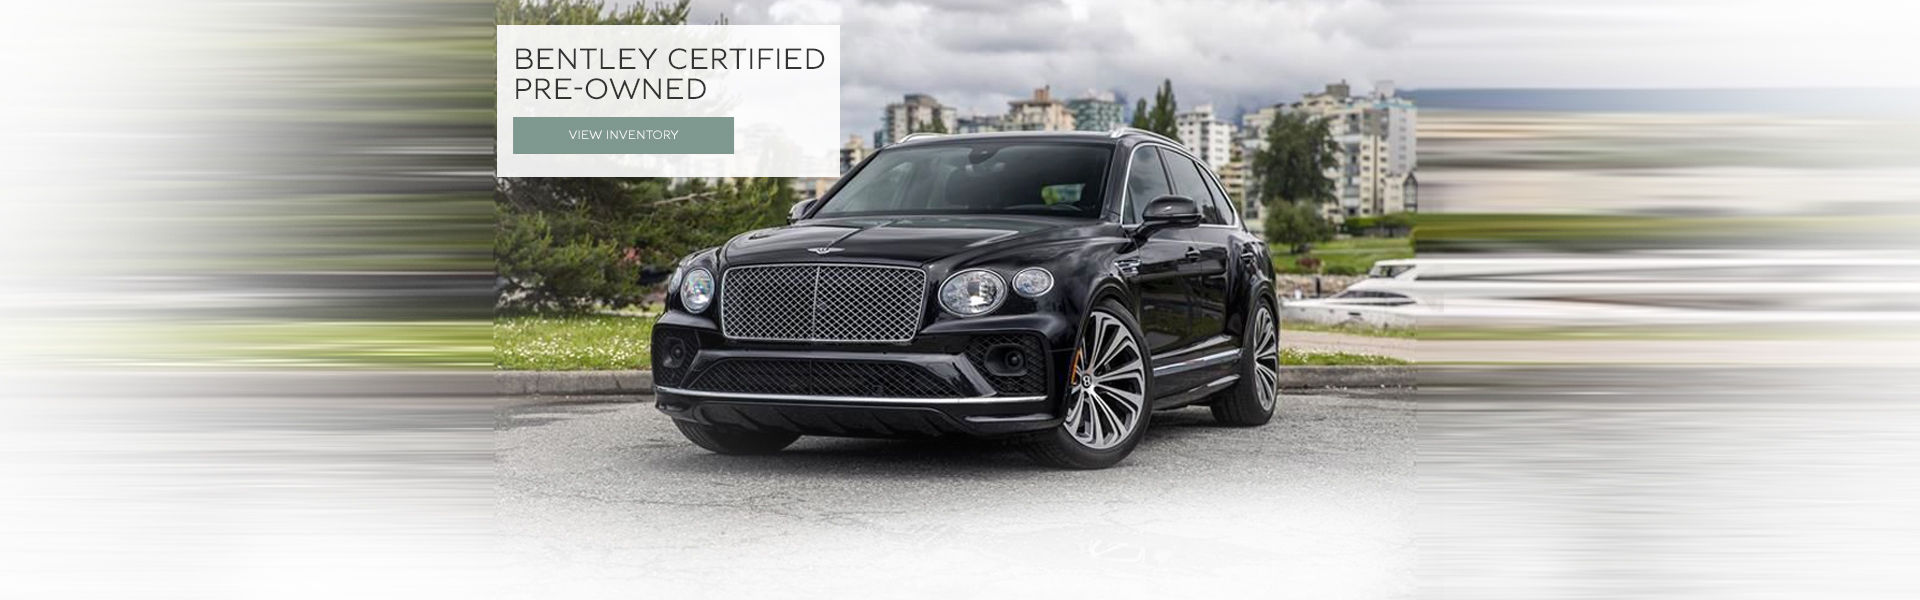 Bentley Certified Pre-Owned